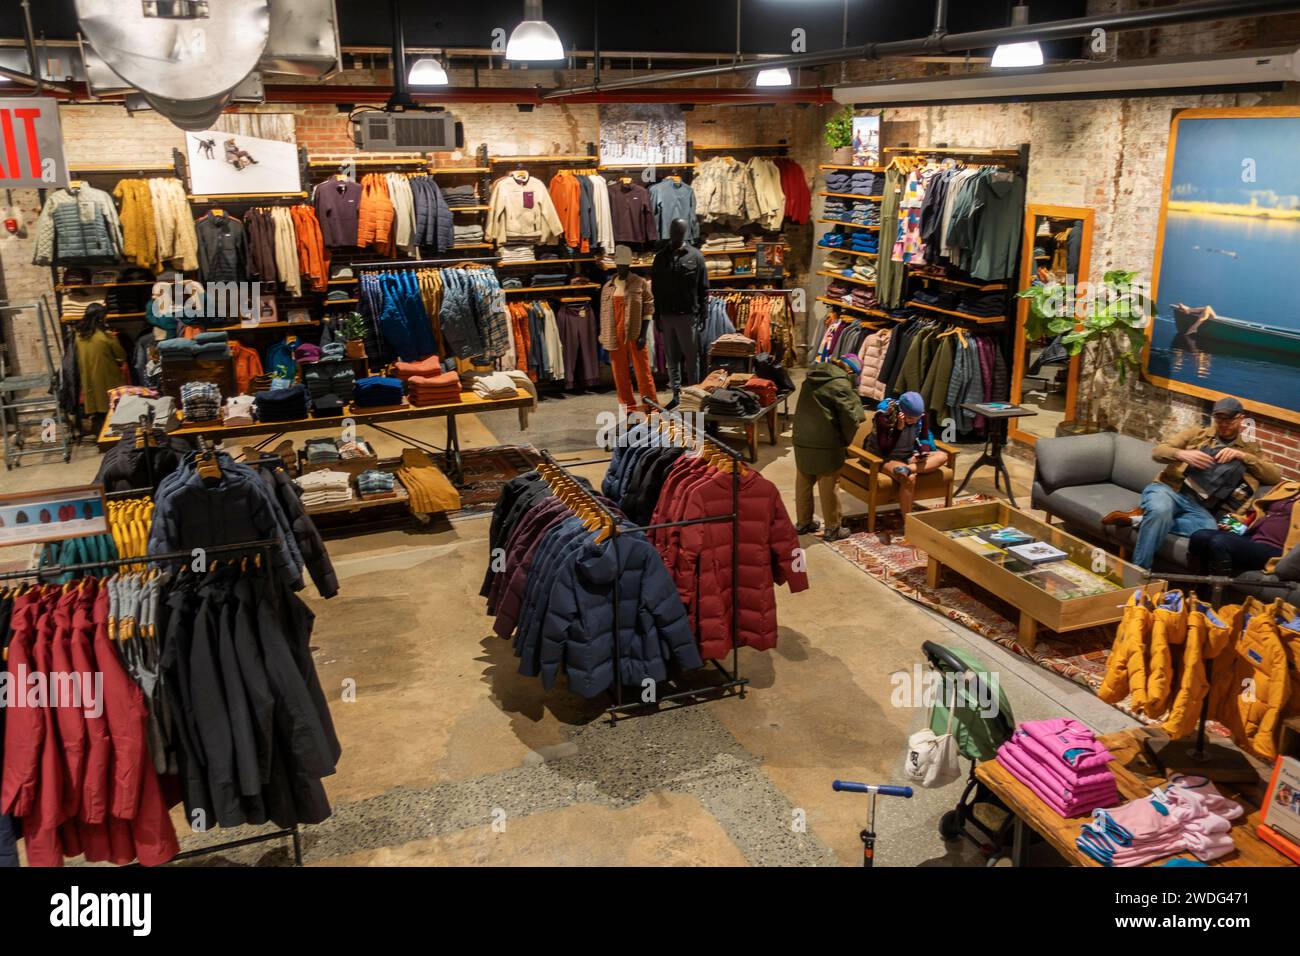 Patagonia-Geschäft in Williamsburg, Brooklyn, NYC Stockfoto